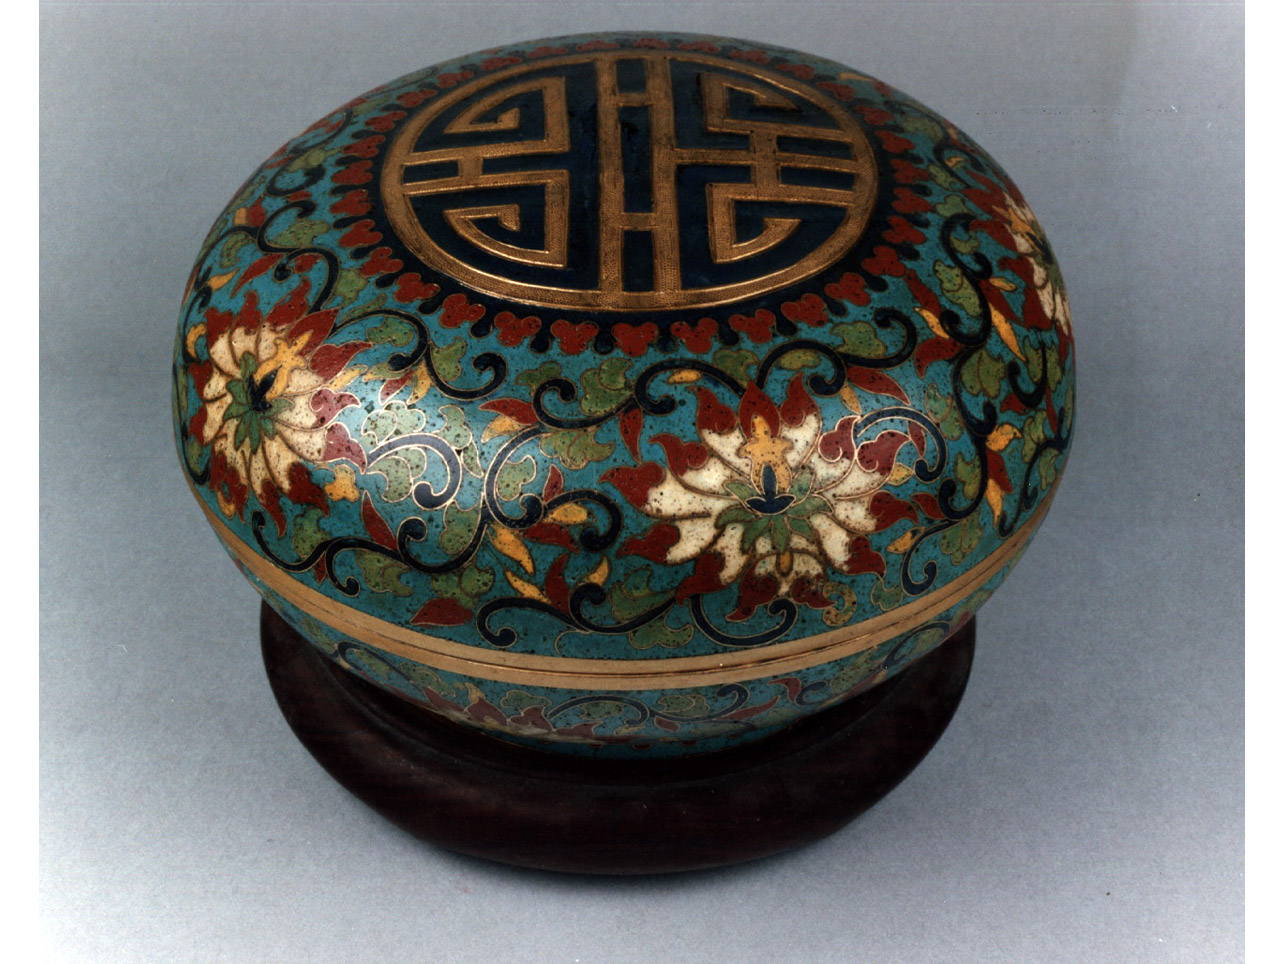 motivi decorativi geometrici e vegetali (scatola) - manifattura cinese (sec. XVIII)